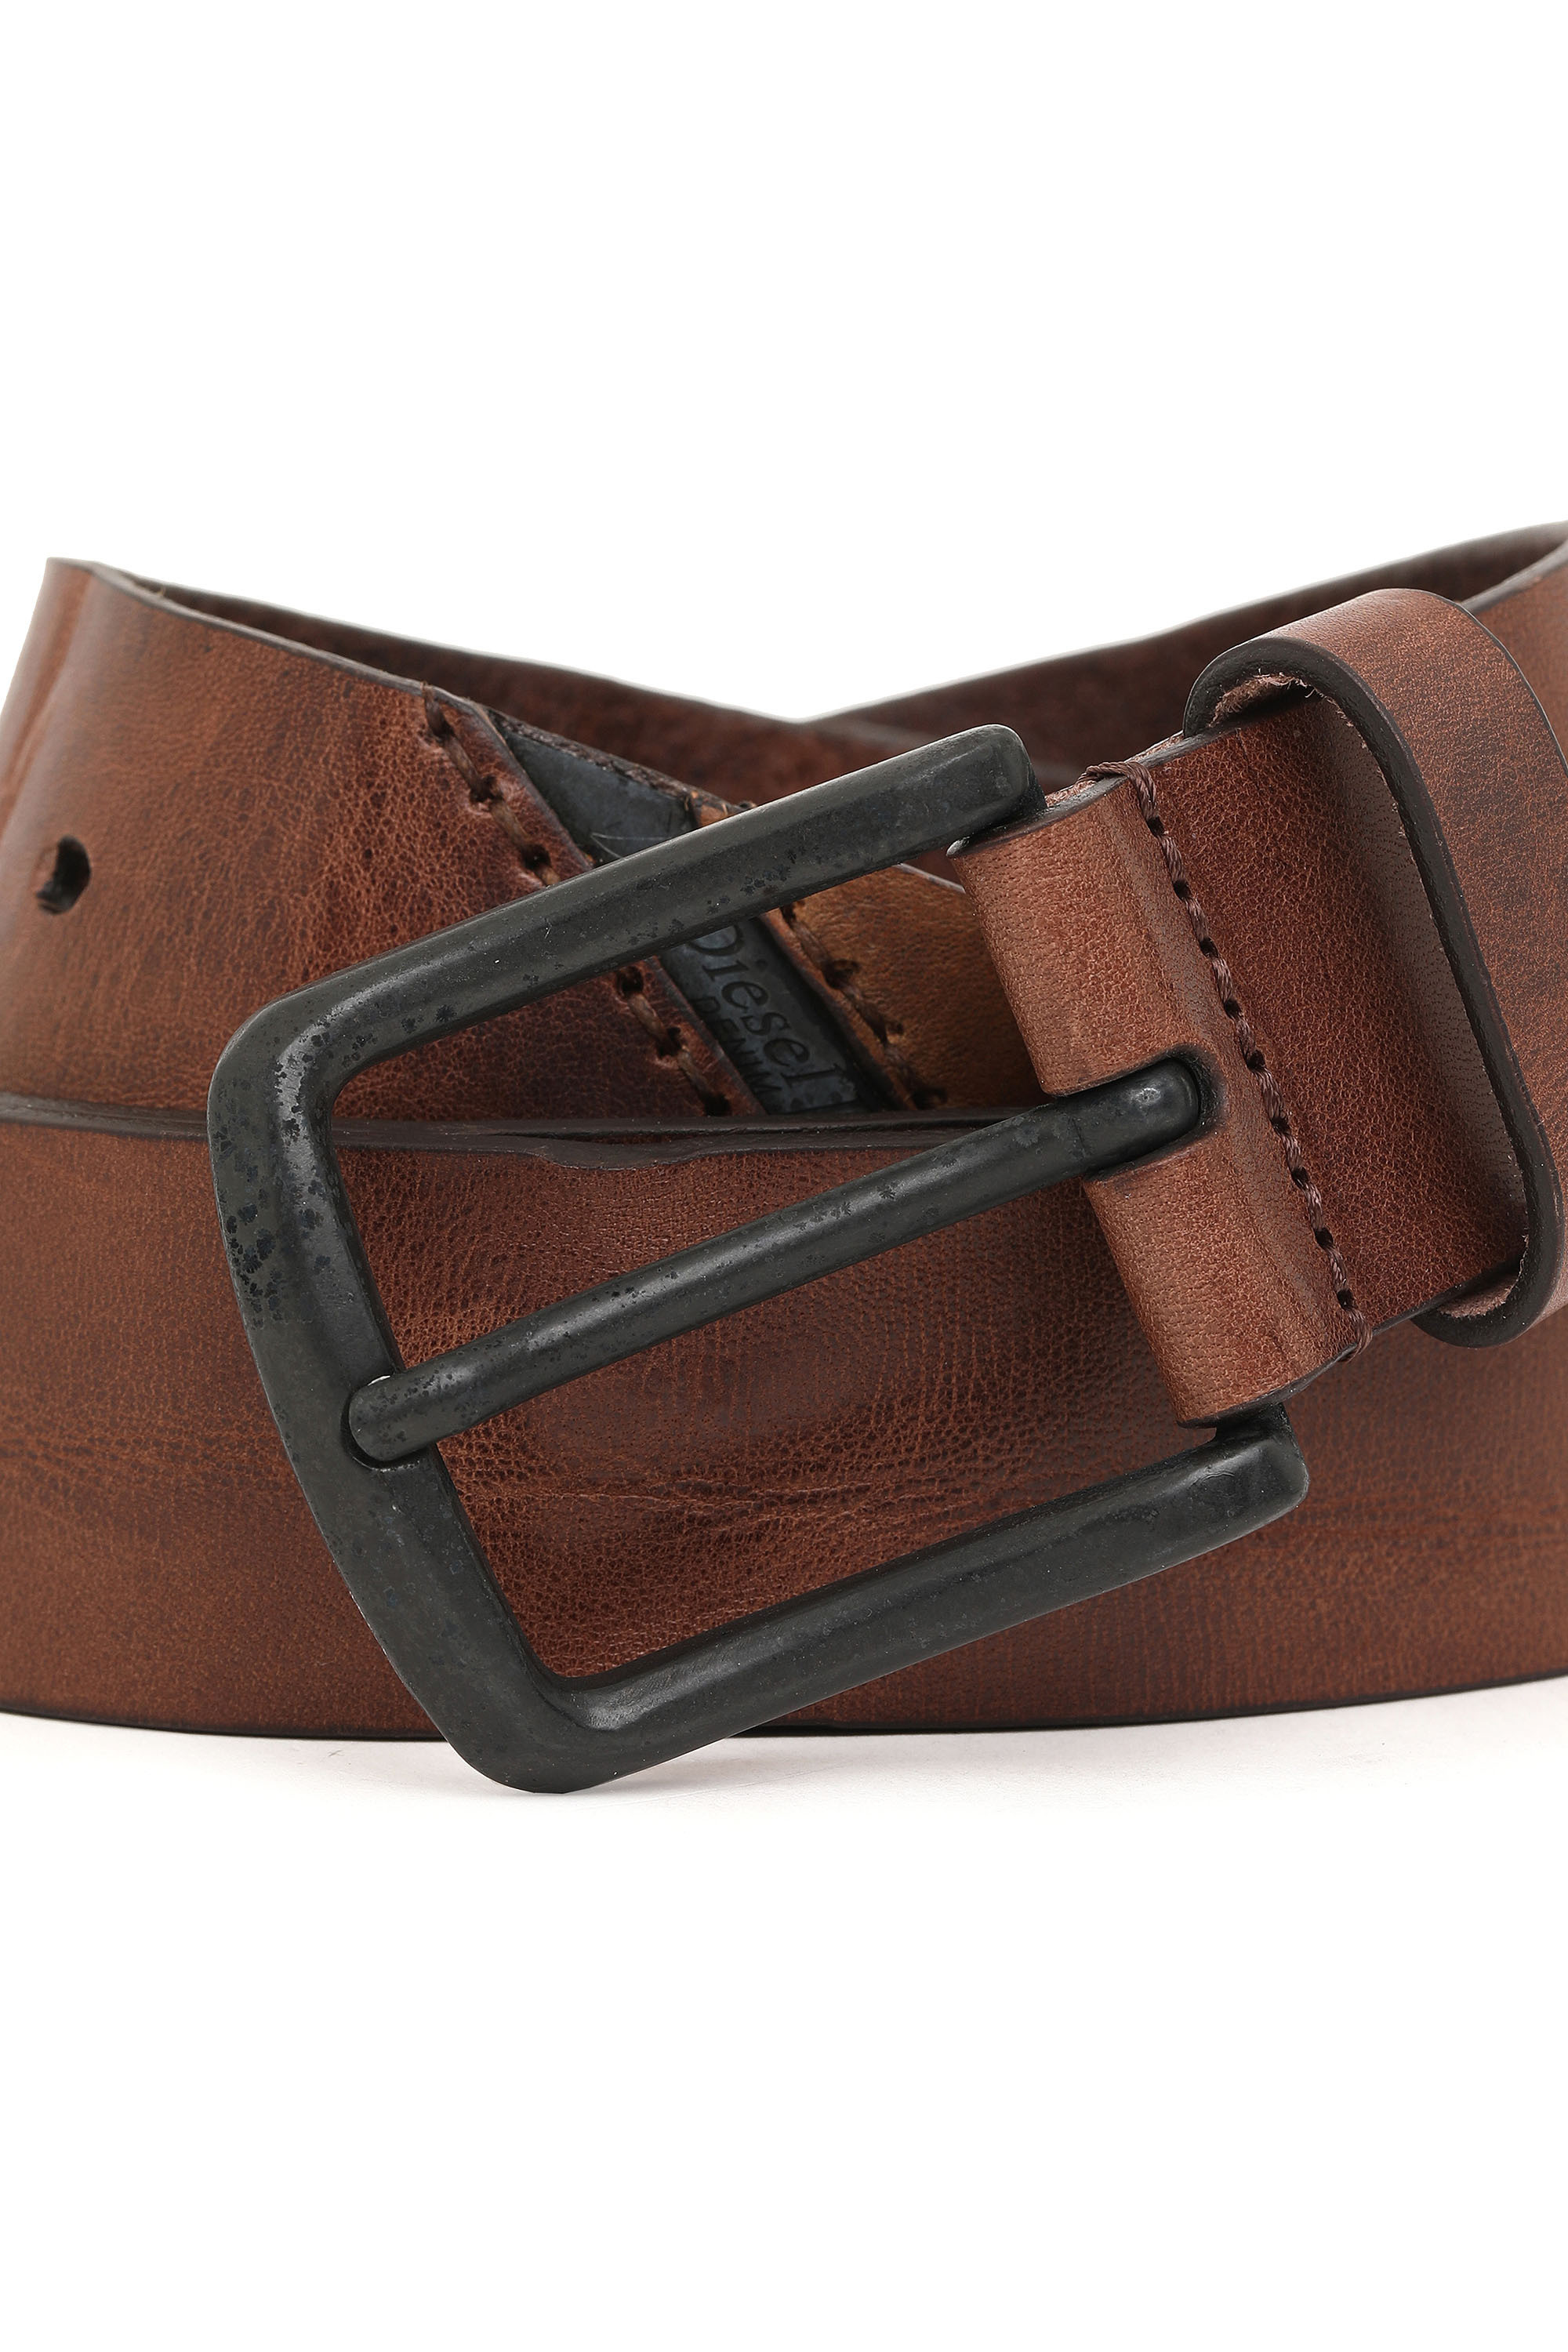 B-LINE Men: Treated leather belt with diesel logo | Diesel